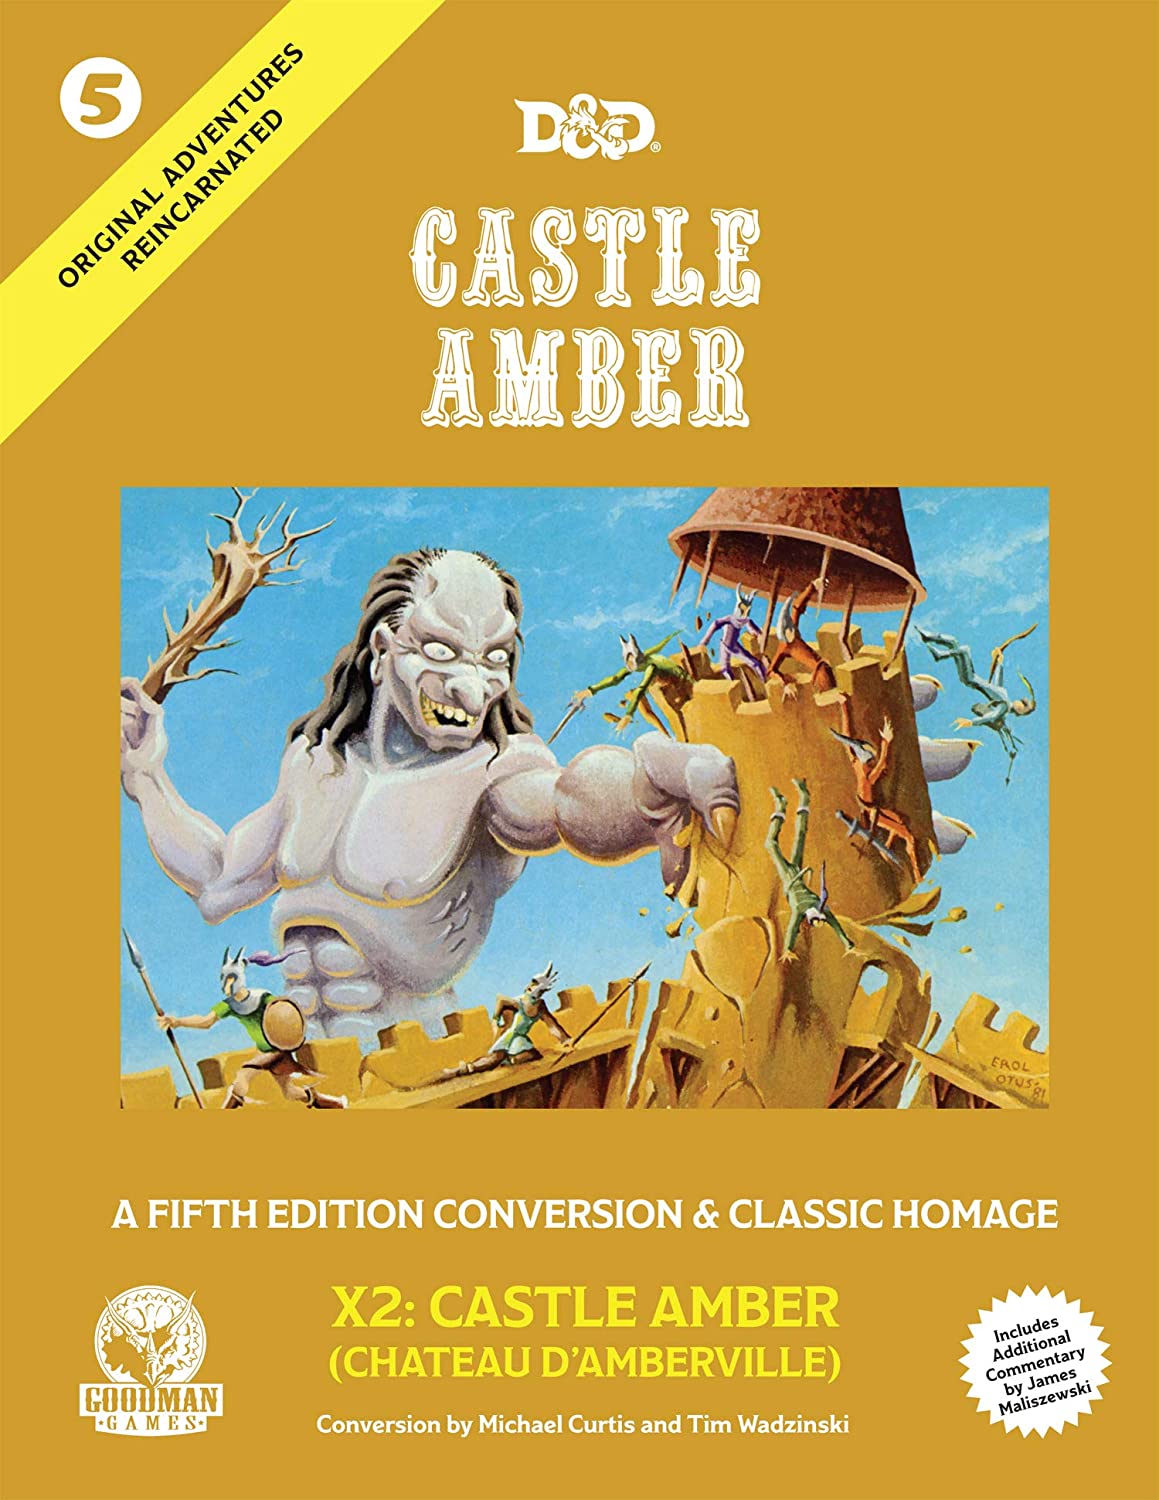 Original Adventures Reincarnated - #5: Castle Amber